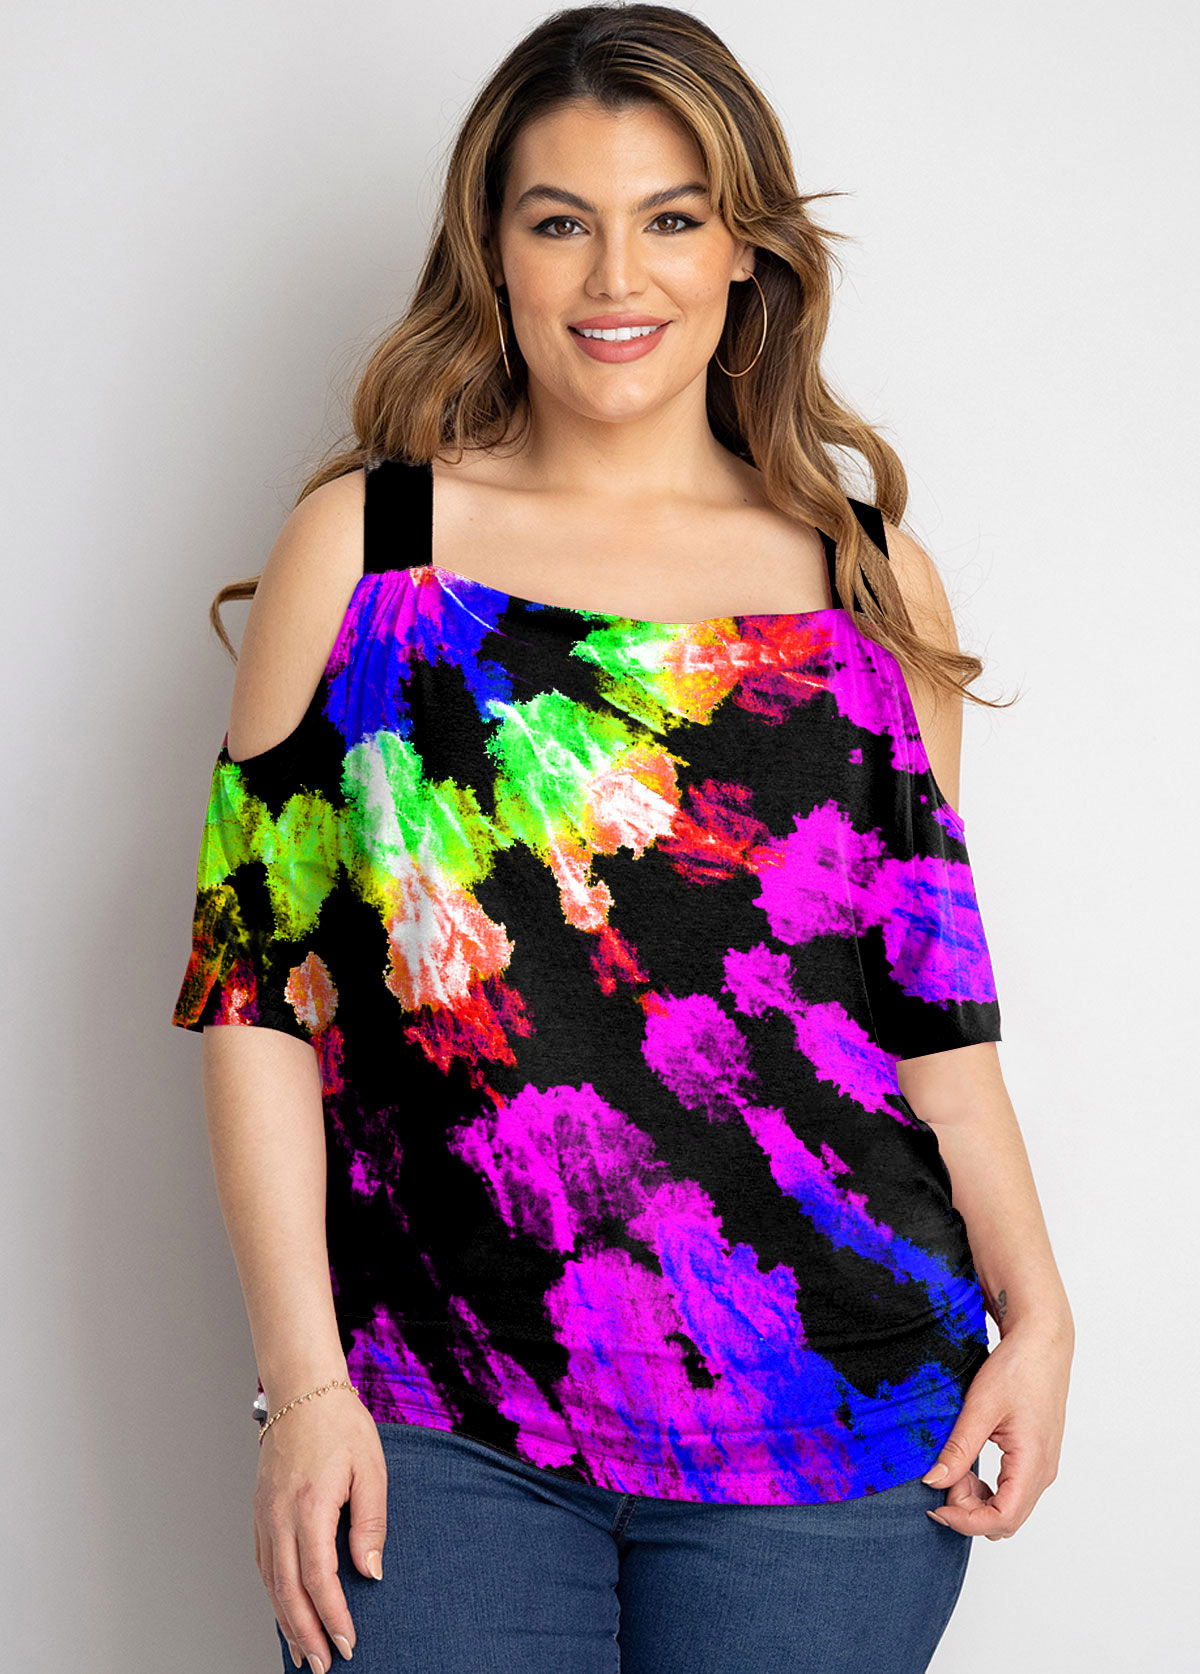 ROTITA Tie Dye Print Plus Size Rainbow Color T Shirt